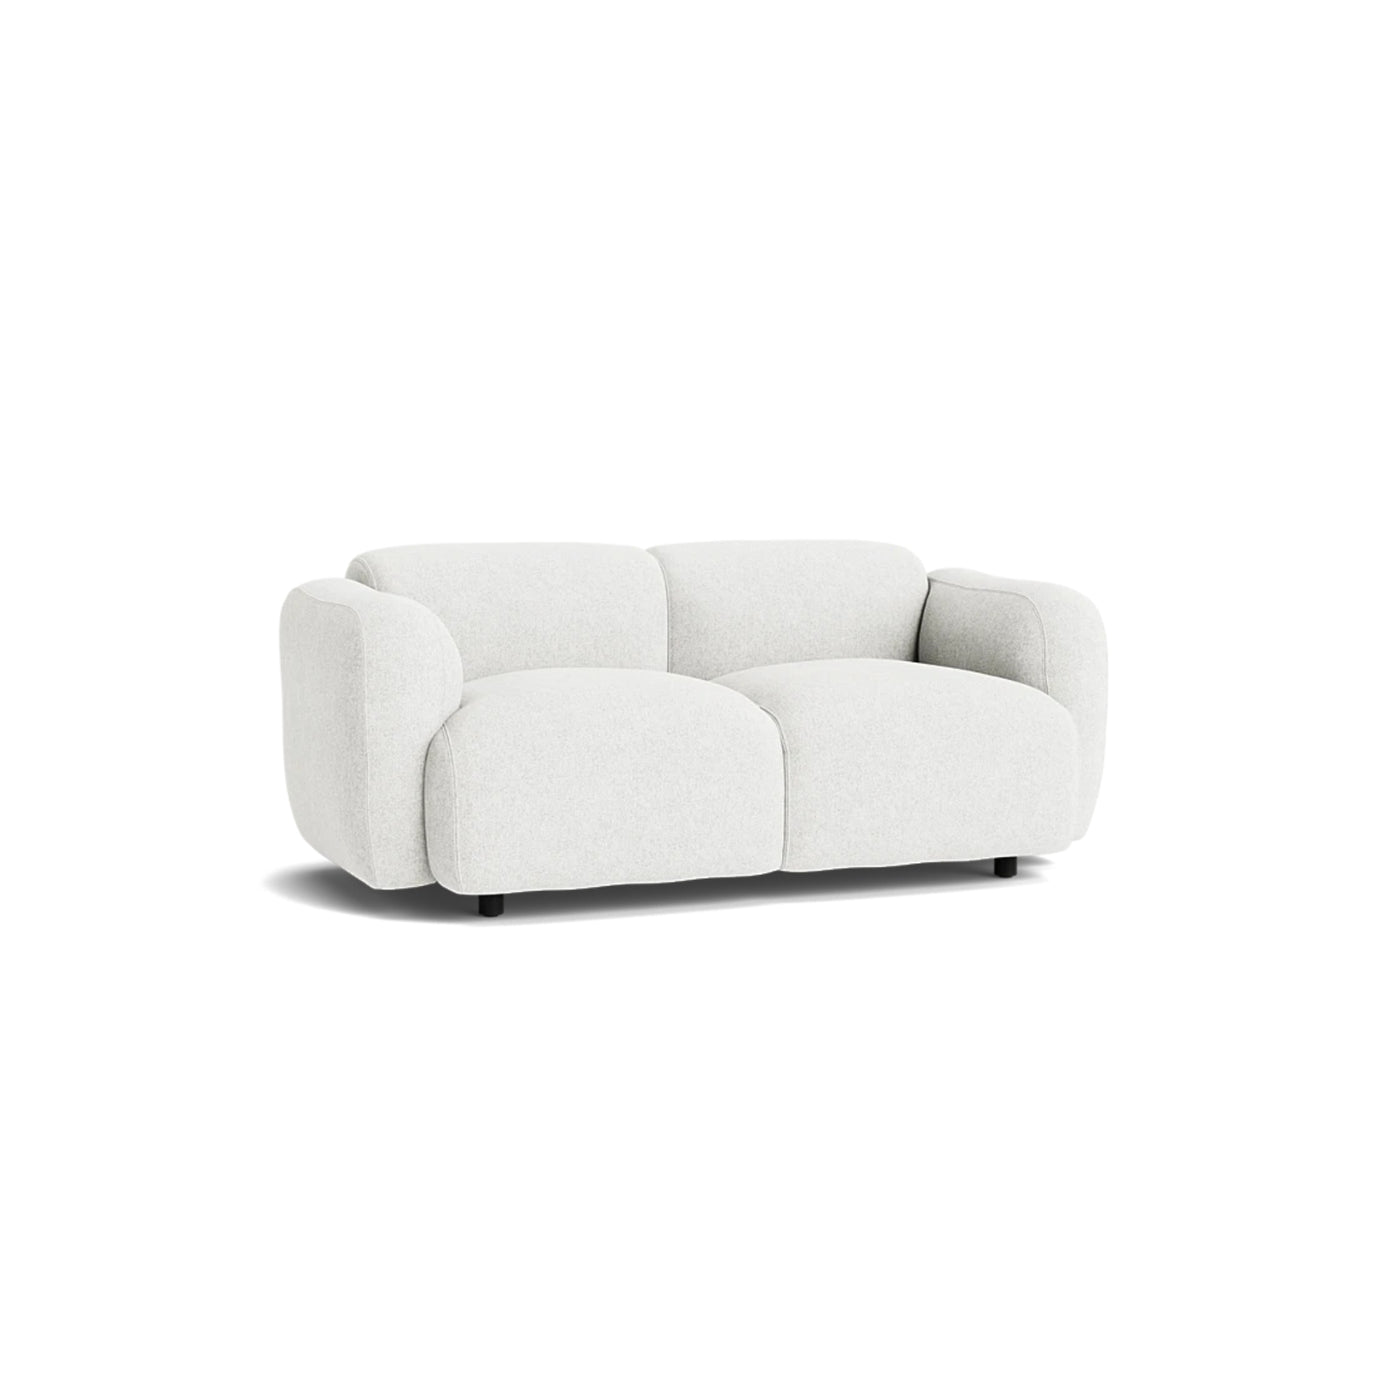 Normann Copenhagen Swell 2 Seater Sofa at someday designs. #colour_hallingdal-110